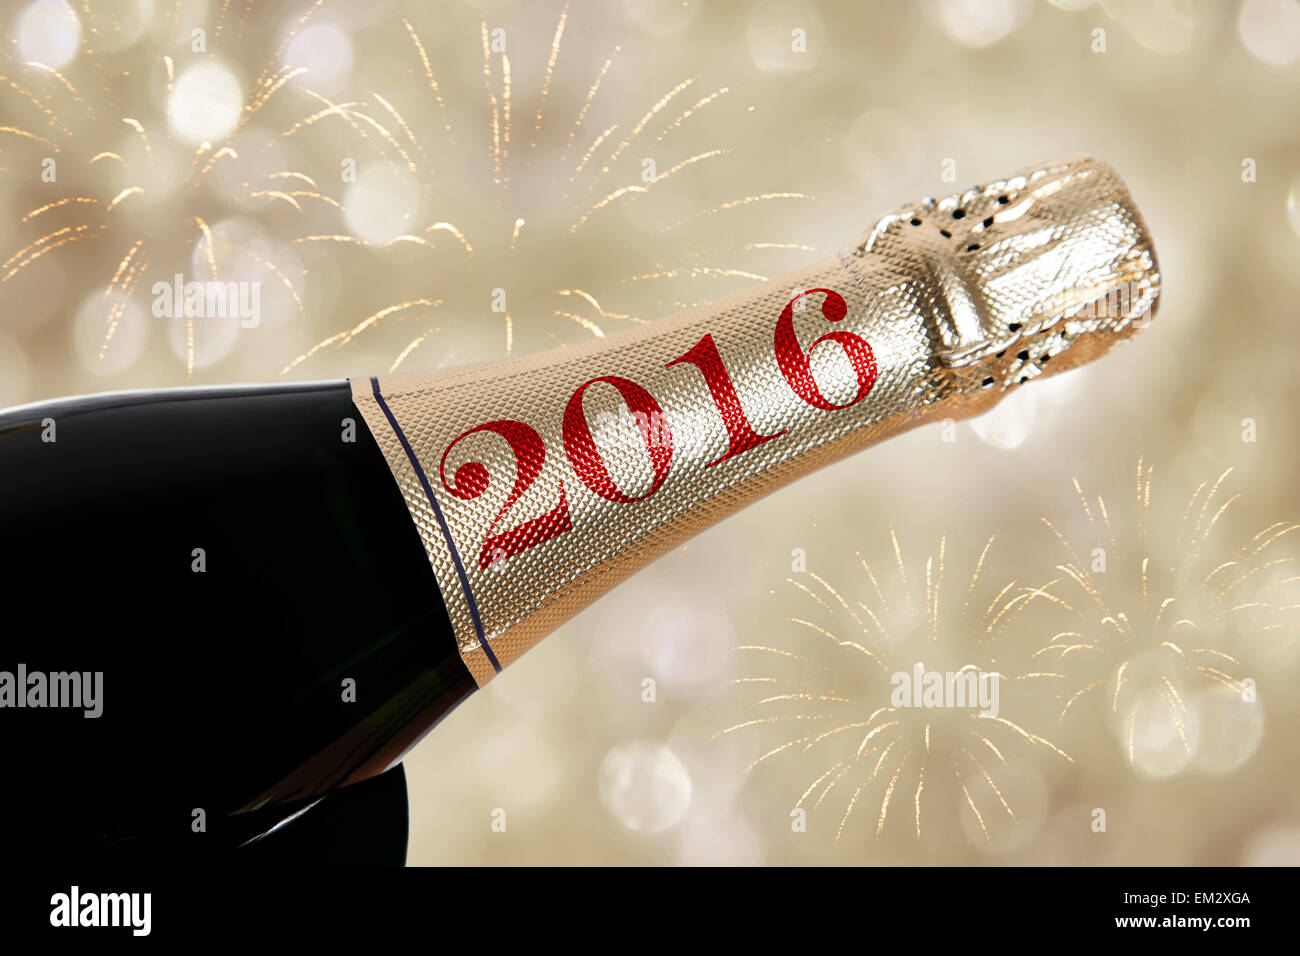 2016 written on champagne bottle Stock Photo